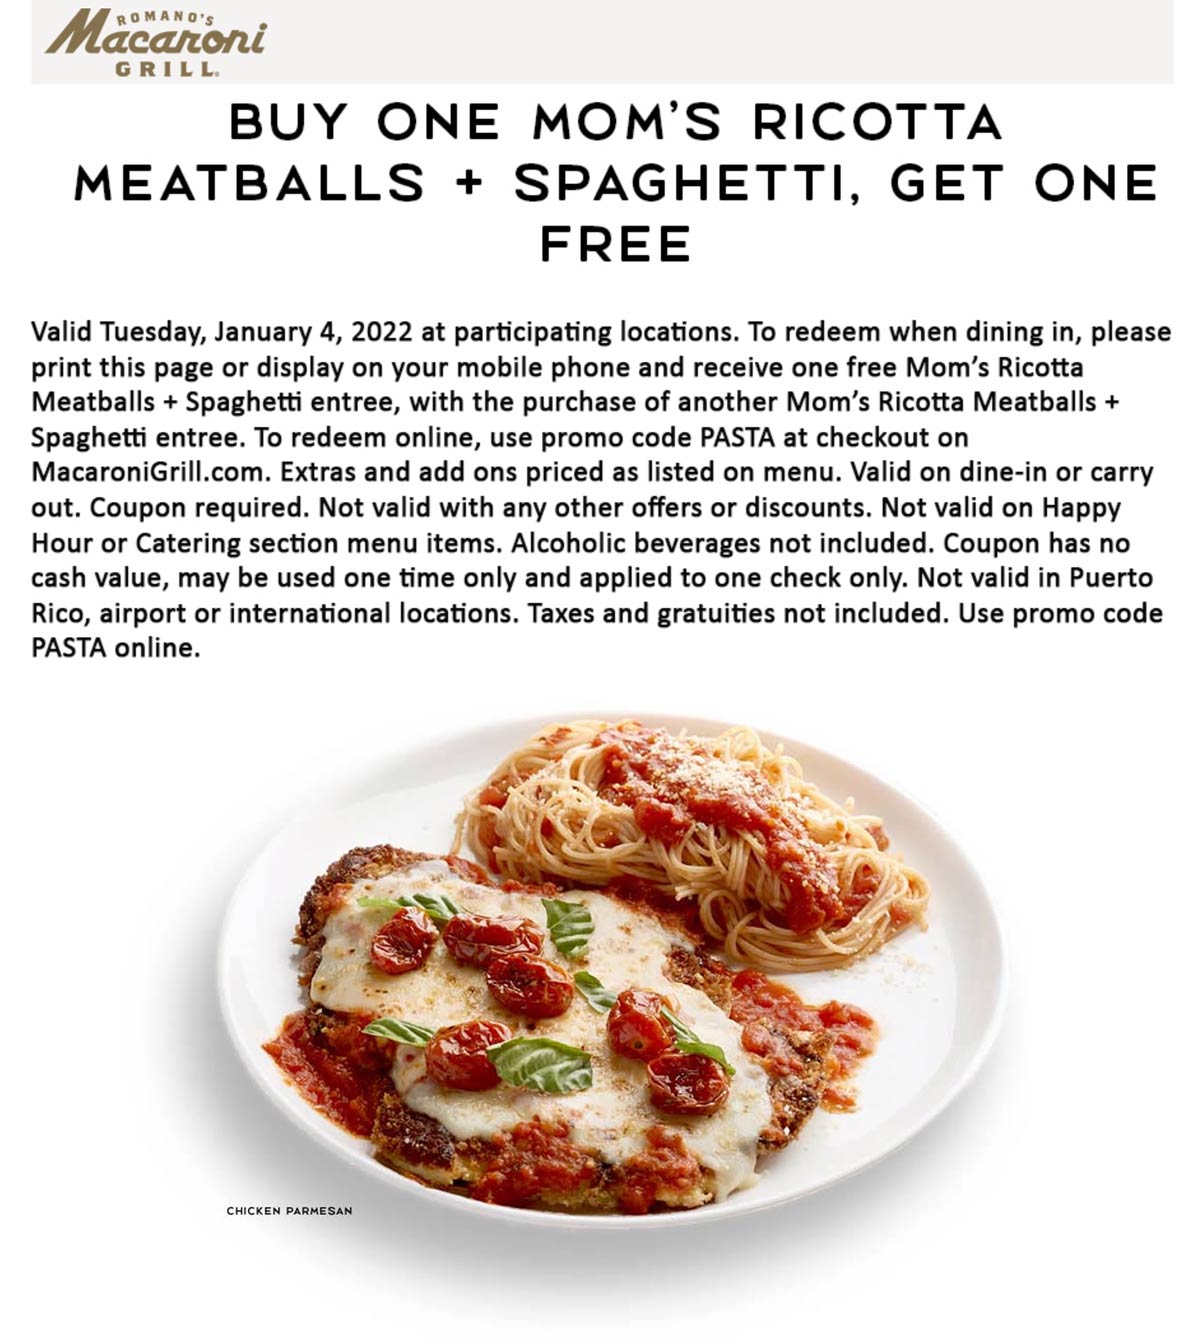 Macaroni Grill restaurants Coupon  Second spaghetti & meatballs free today at Macaroni Grill #macaronigrill 